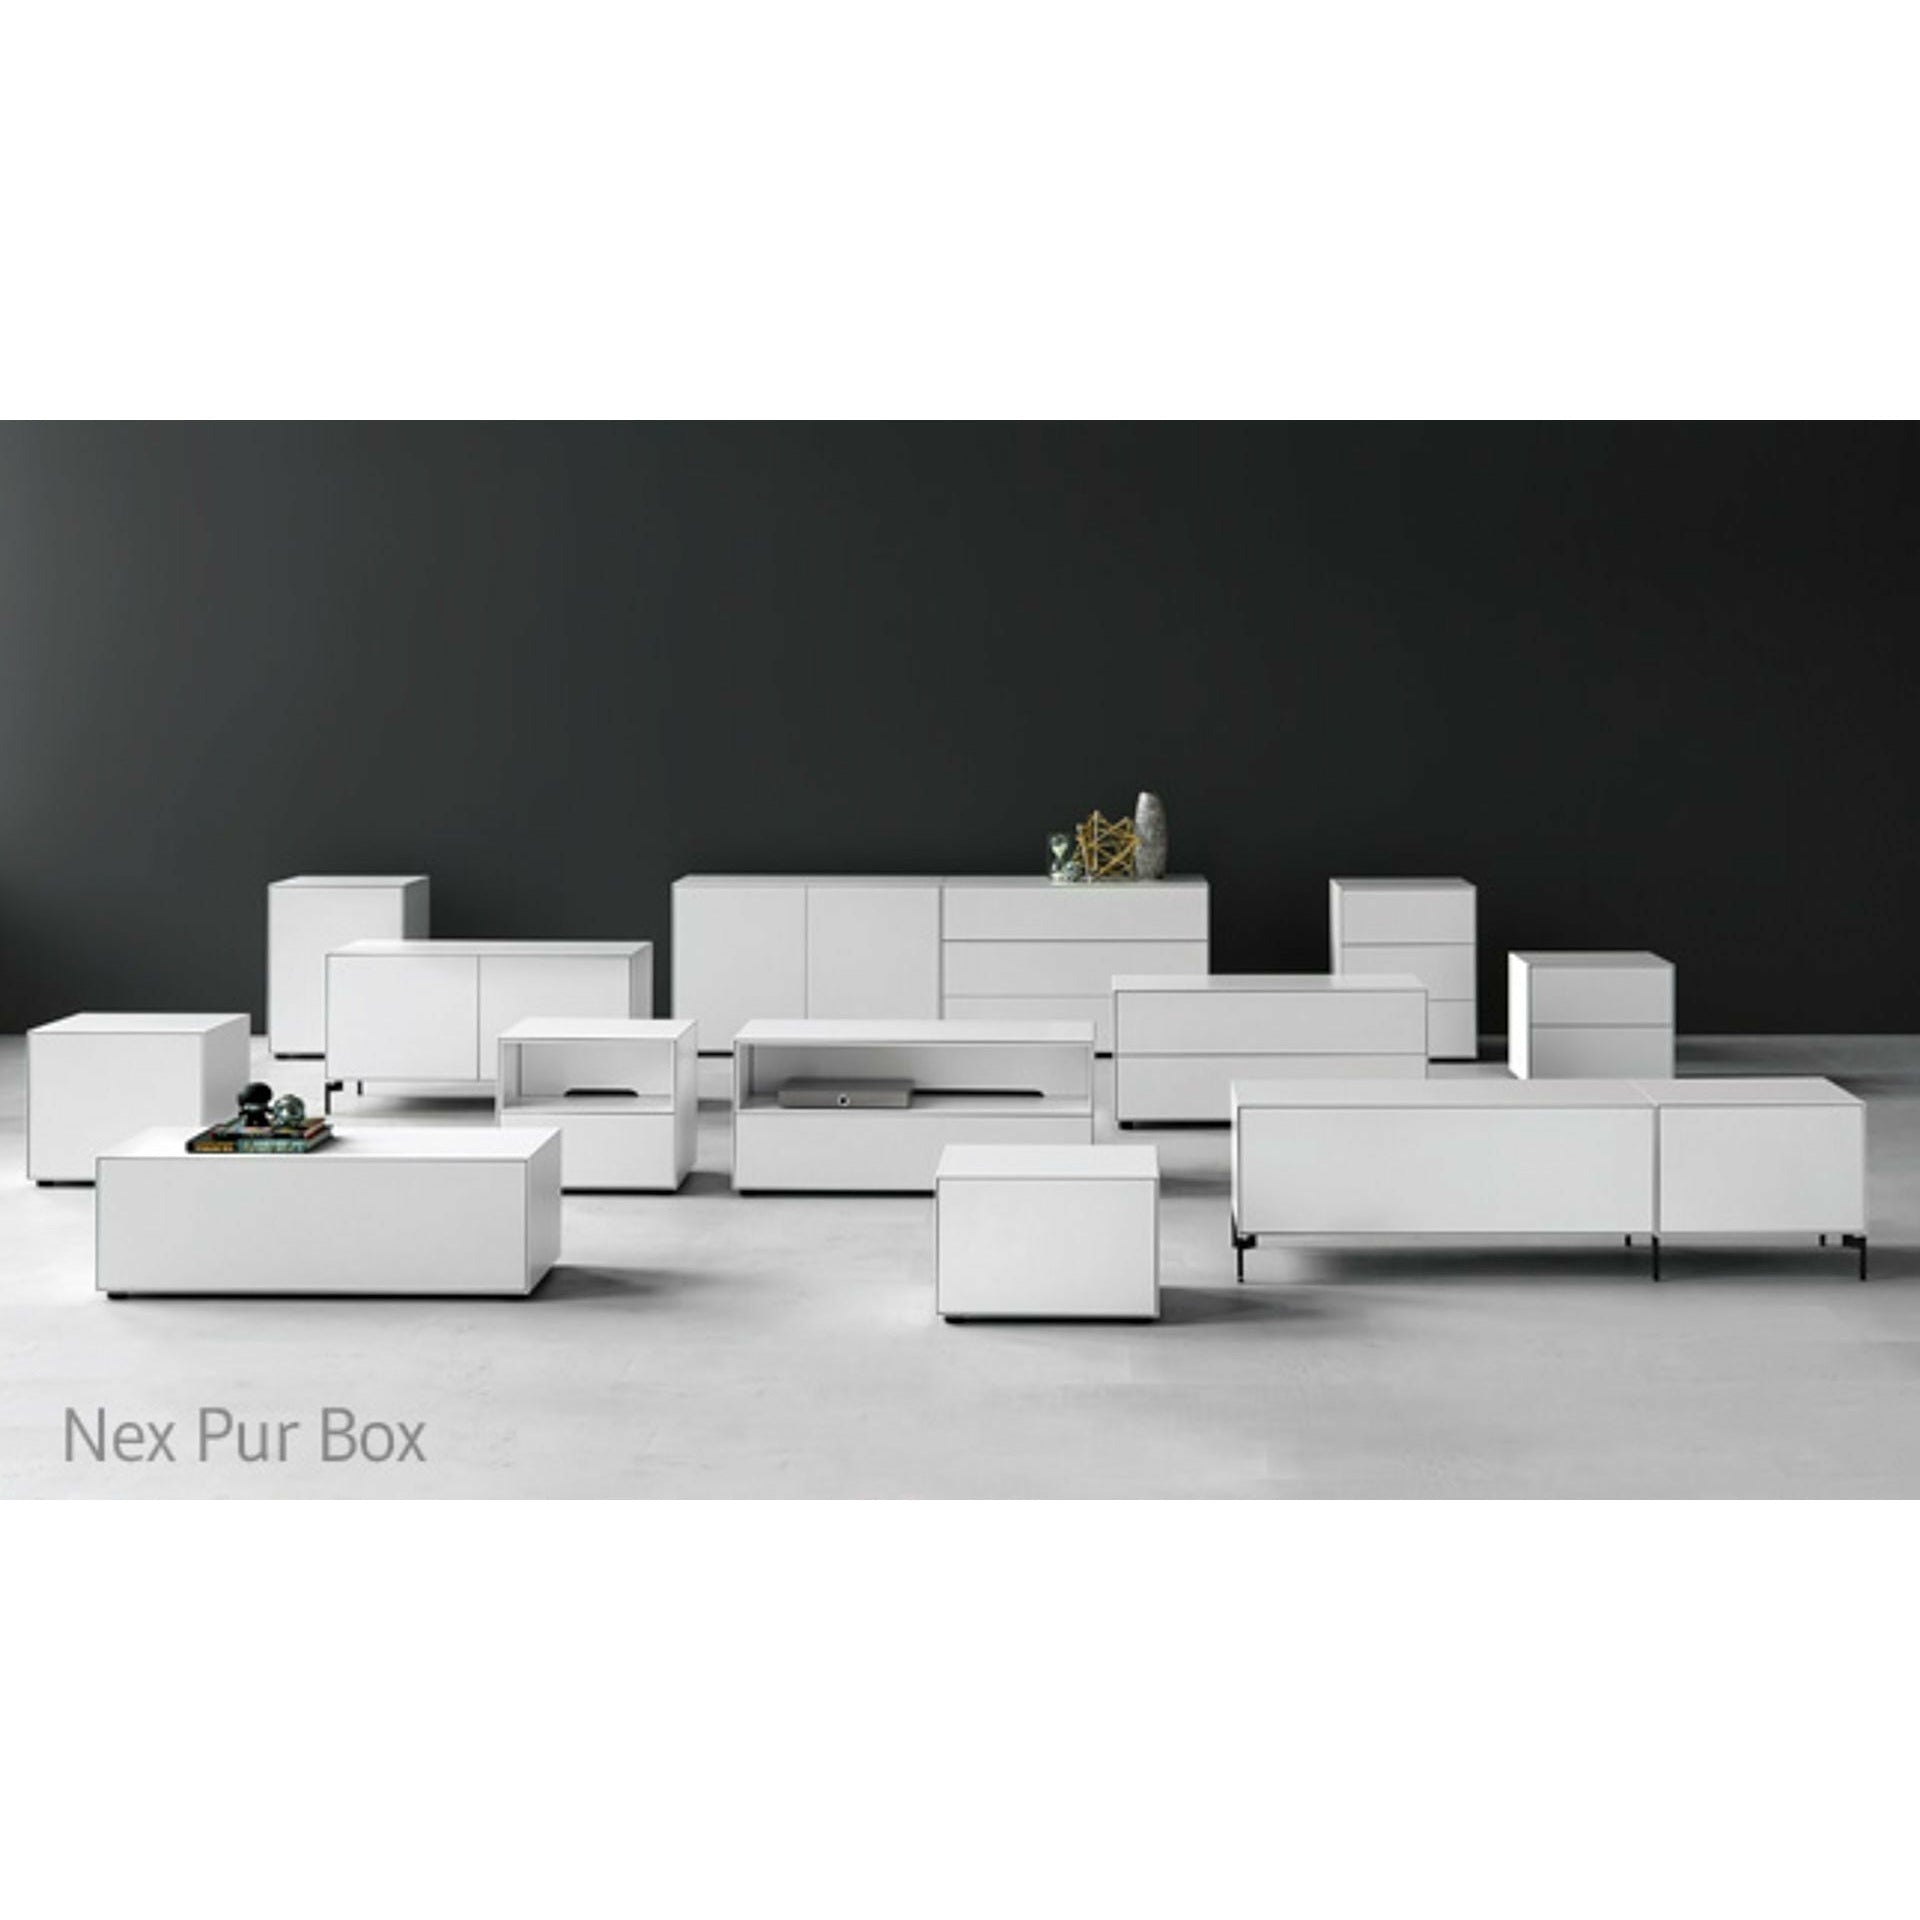 Piure Nex Pur Box Drawer/Door Hx W 50x180 Cm, 2 Shelves/1 Shelf